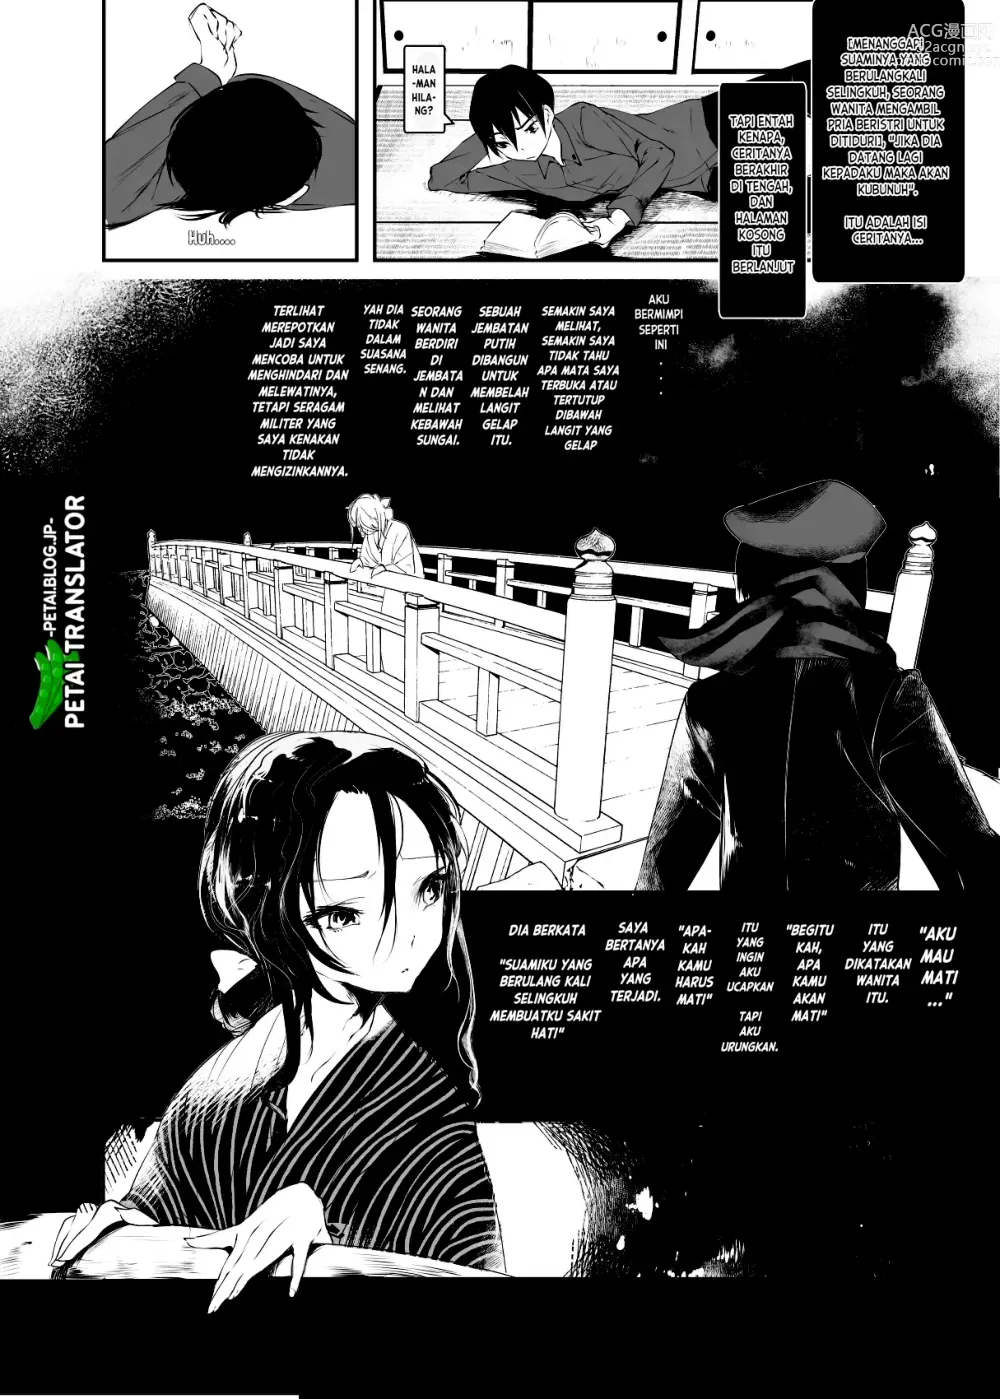 Page 4 of doujinshi Berangan-angan dalam mimpi